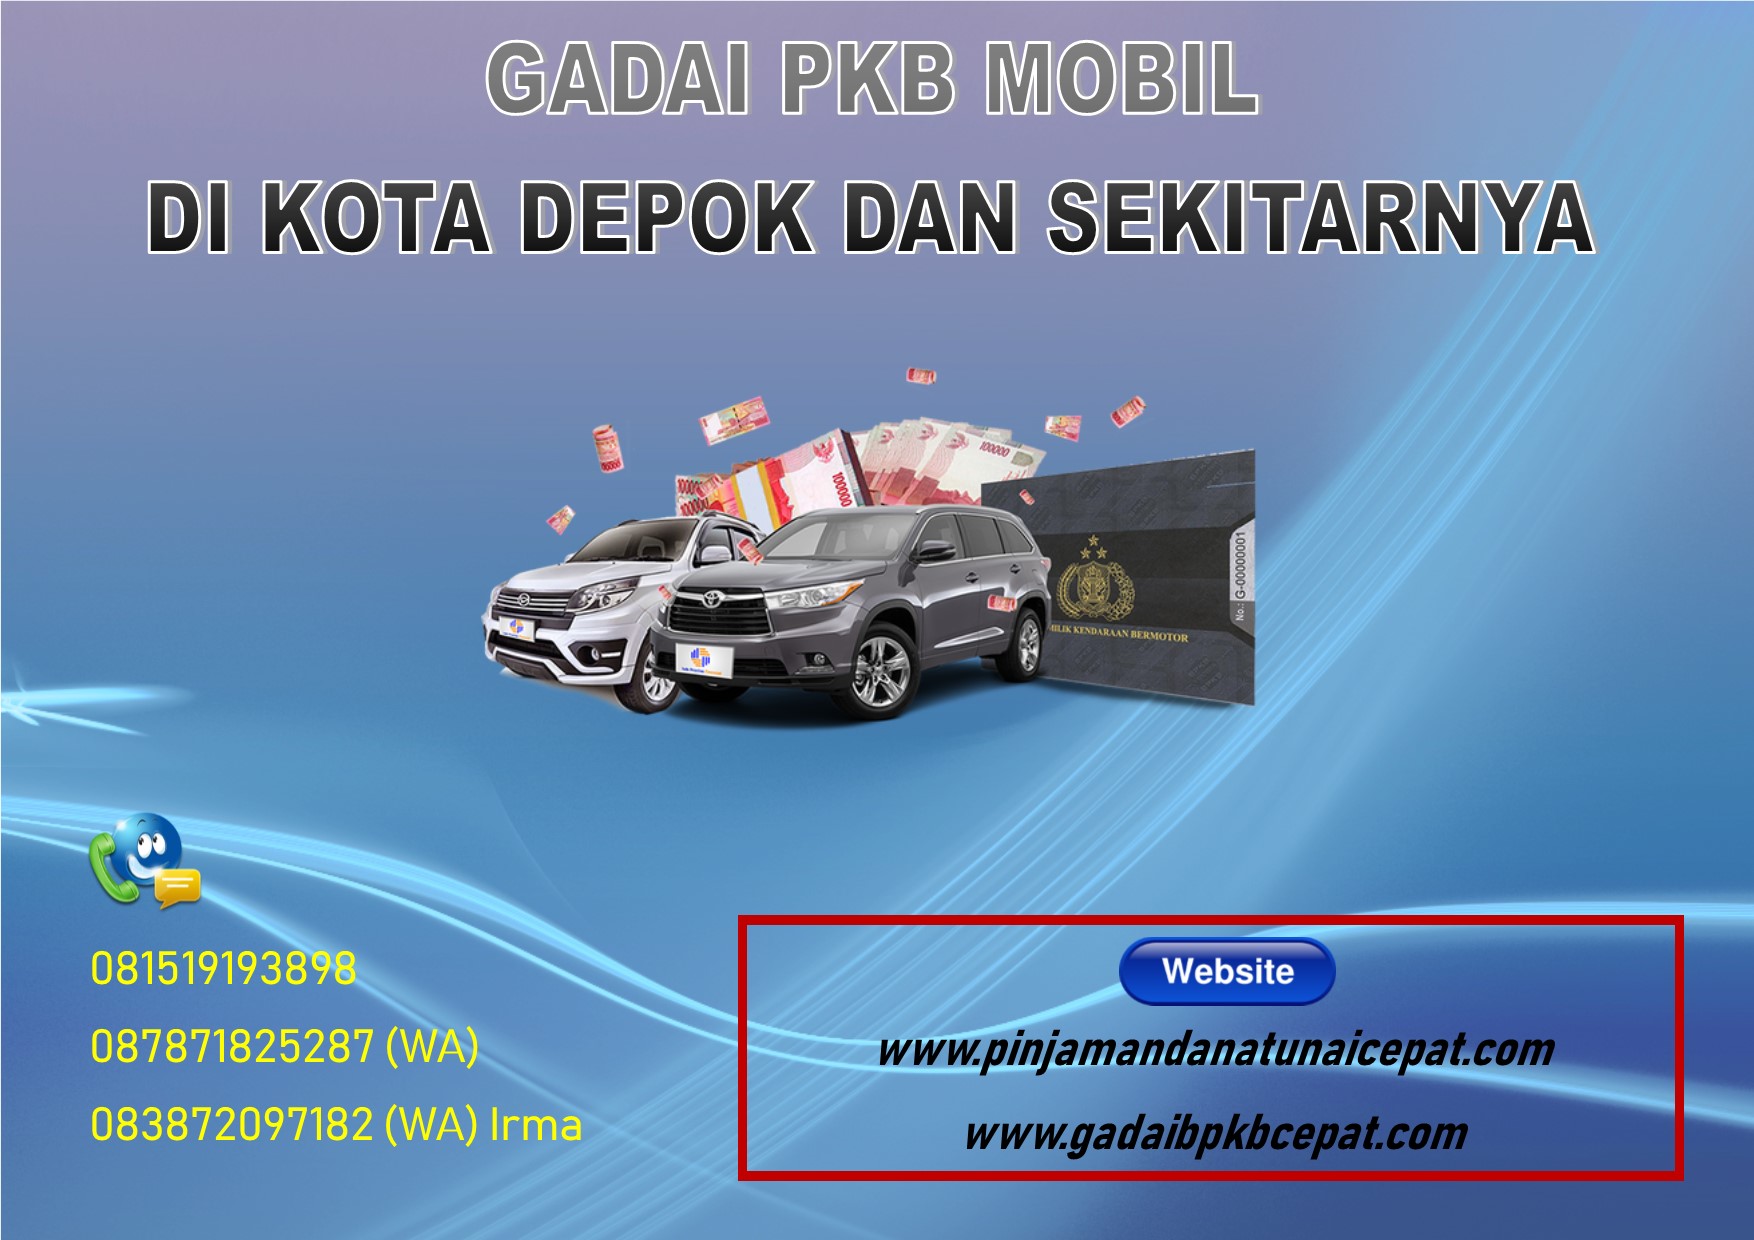 Gadai BPKB Mobil Di Depok | GadaiBPKBMobilCepat.com